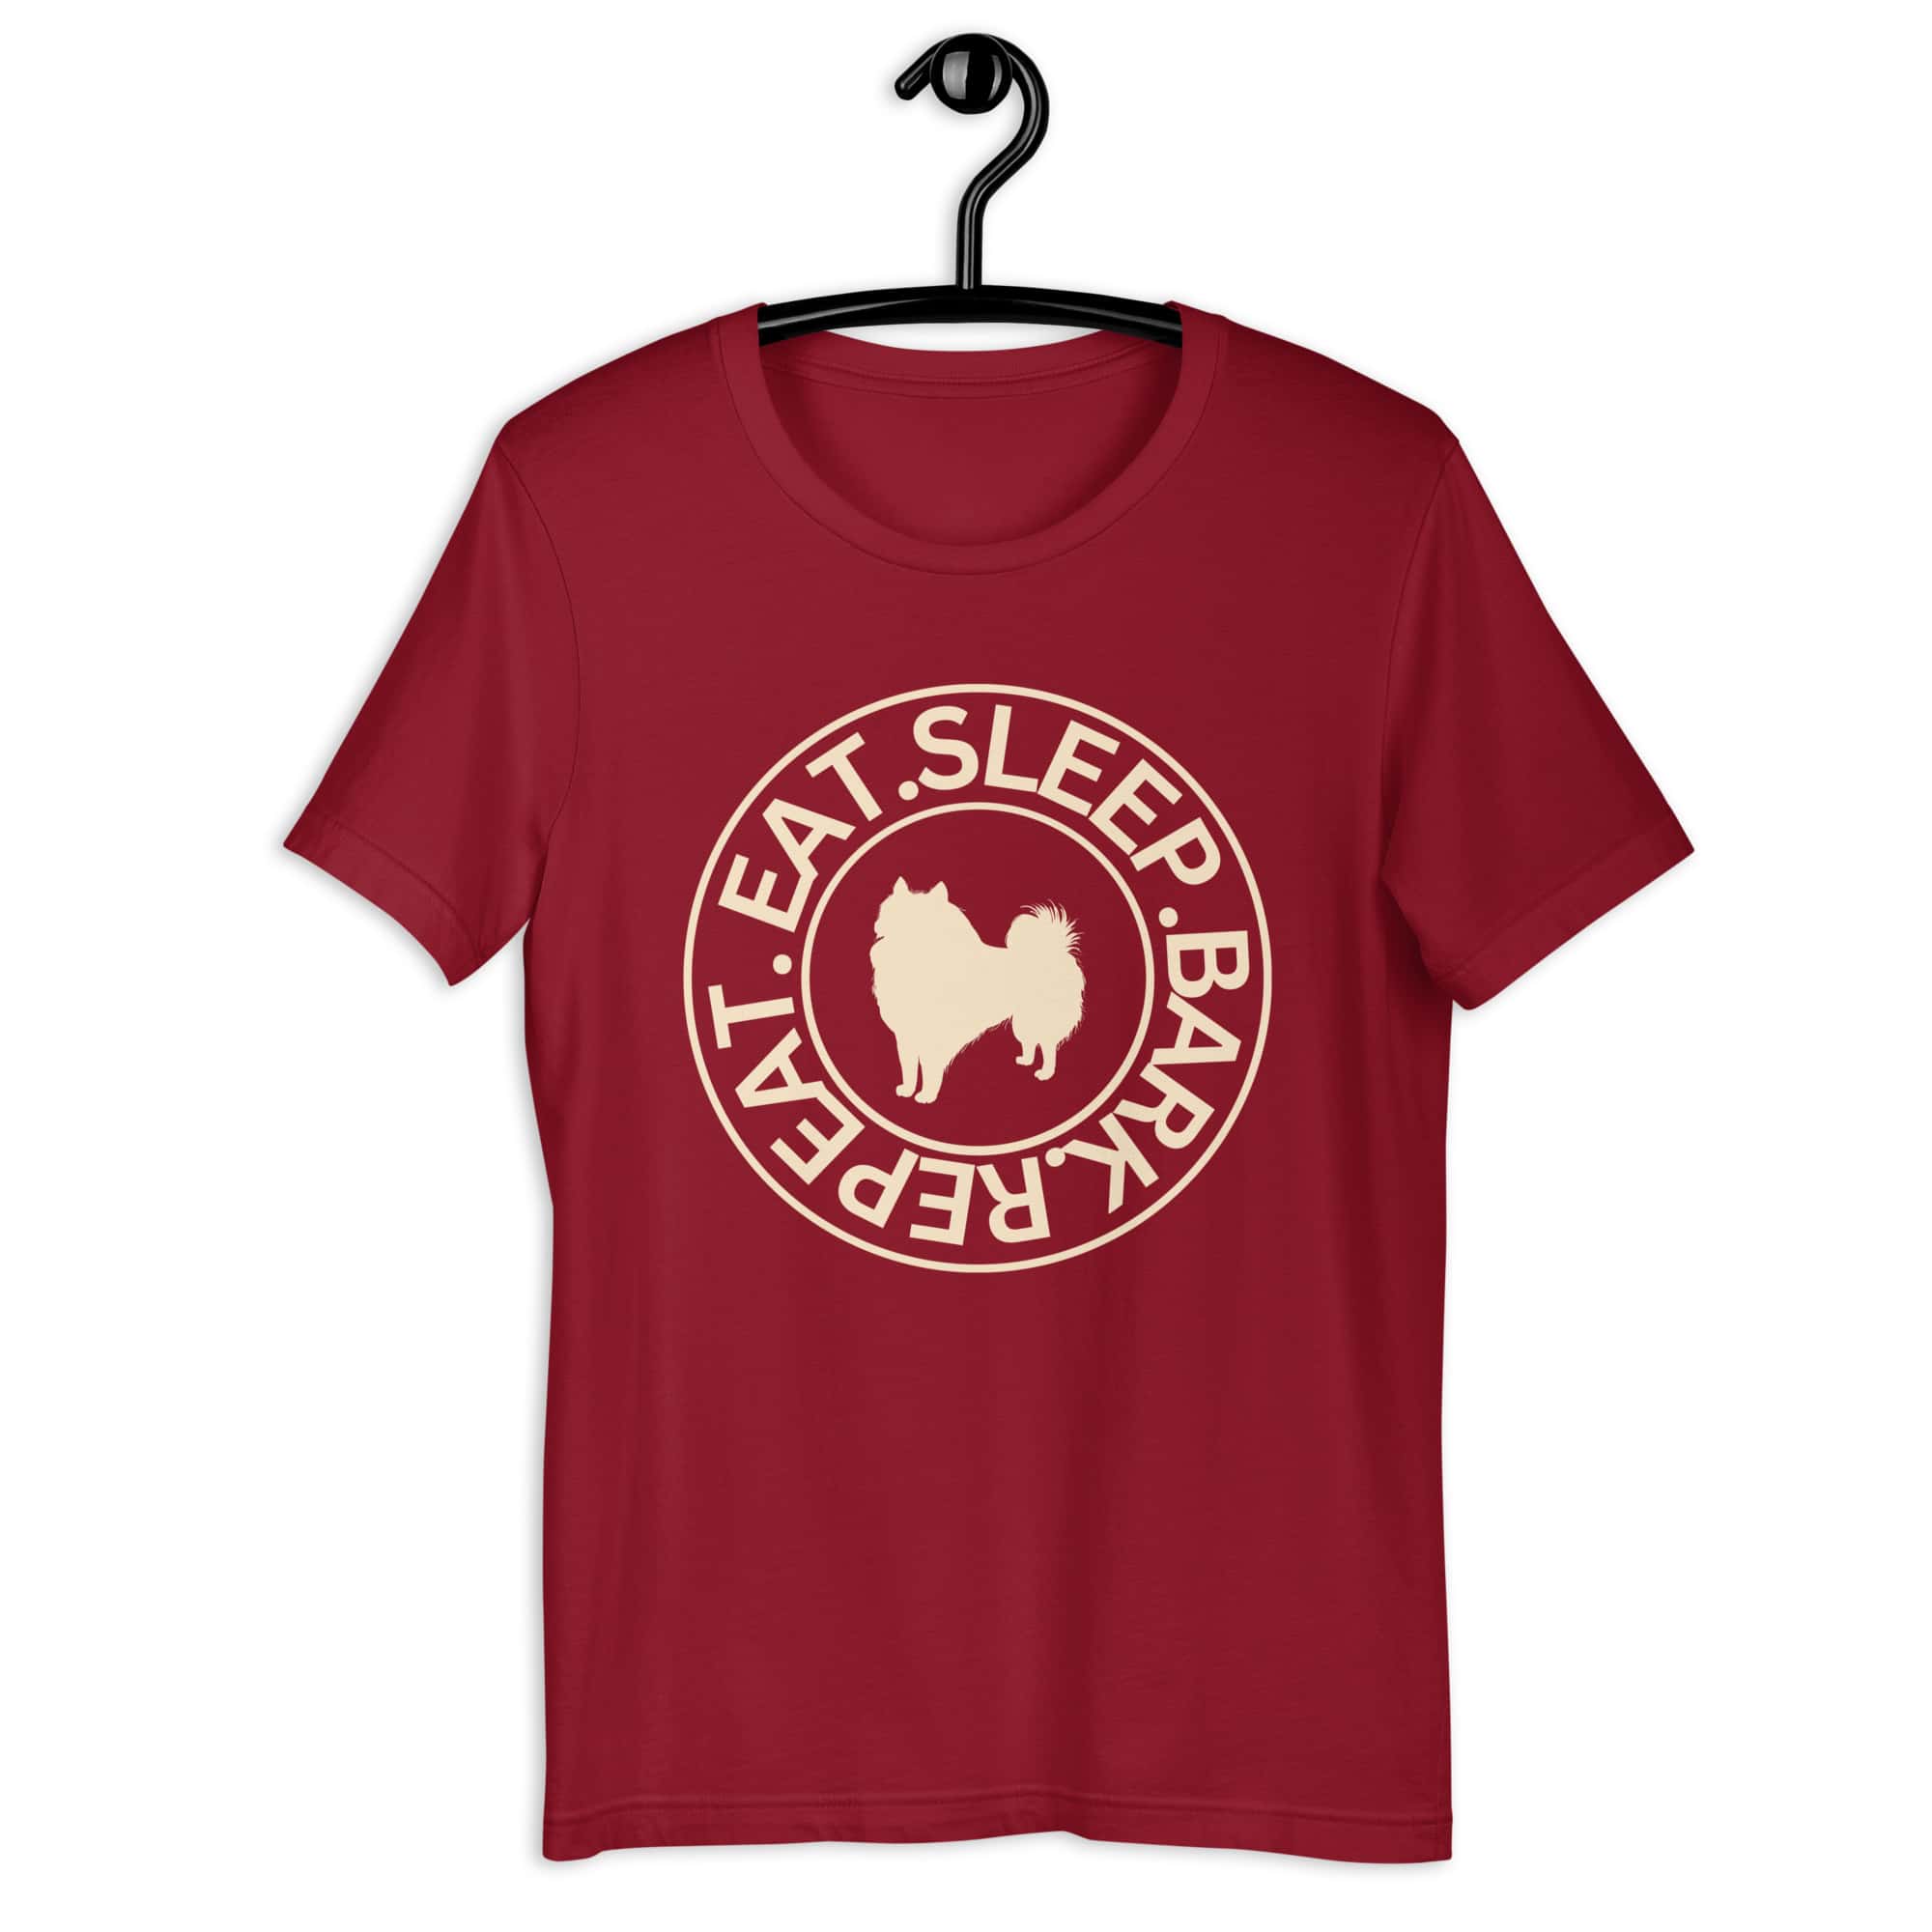 Eat Sleep Bark Repeat Poodle Unisex T-Shirt. Cardinal